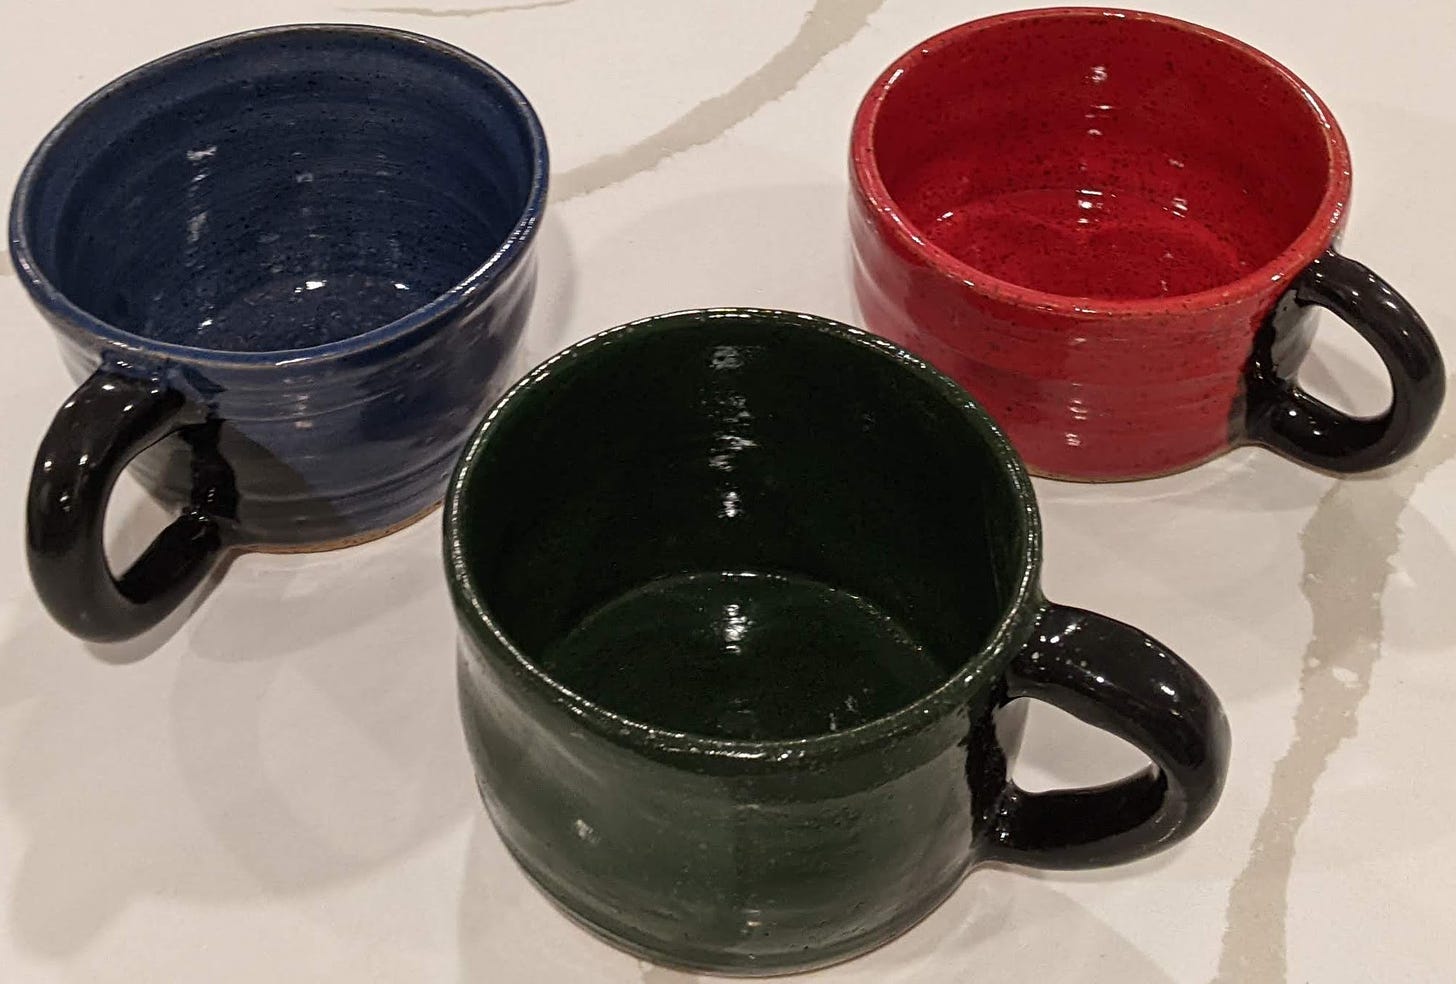 Three mugs, one dark blue, one dark green, one deep red, all three with black handles